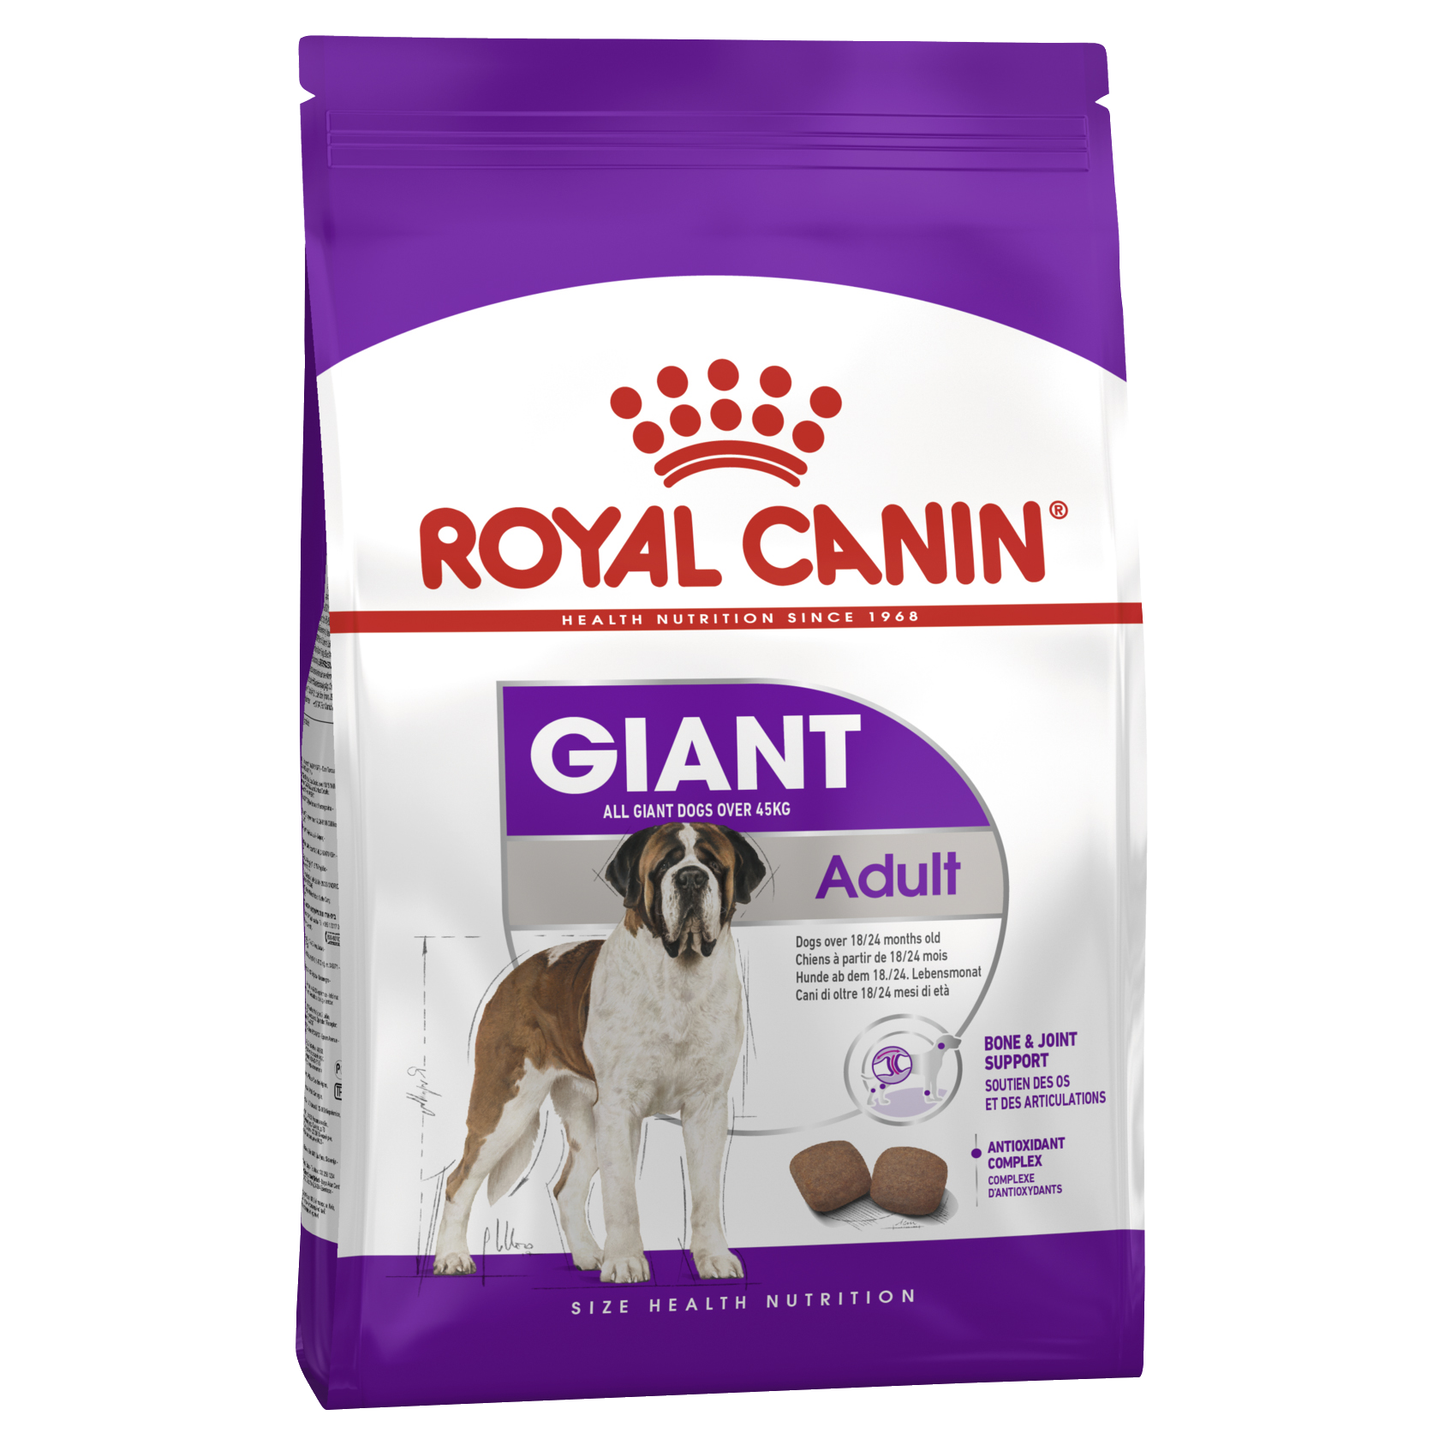 Royal Canin Giant Dry Dog Food